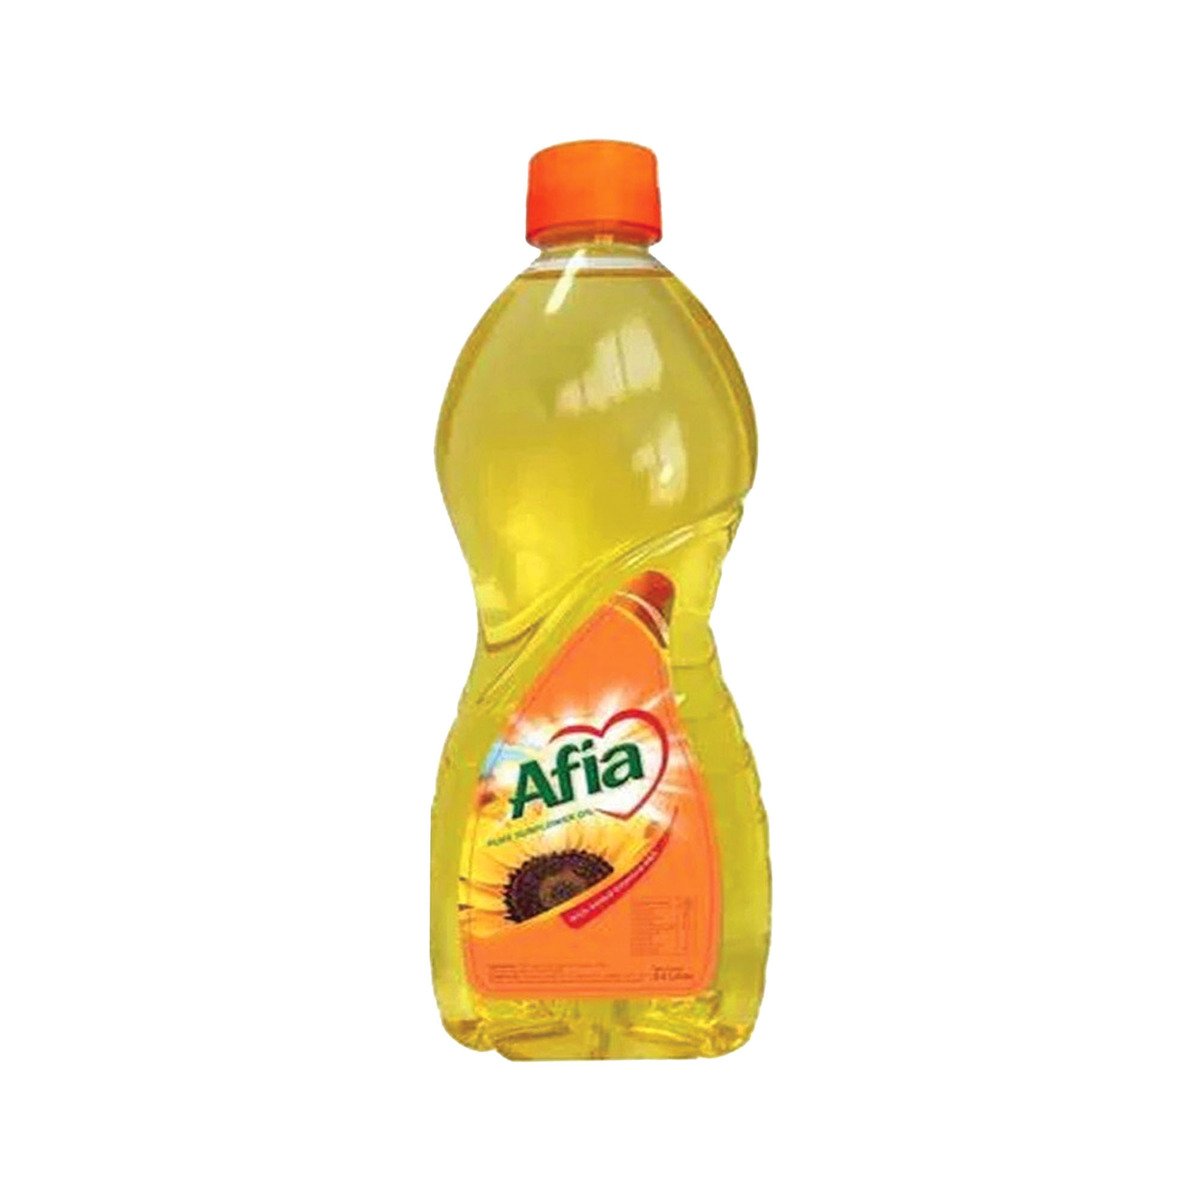 Afia Pure Sunflower Oil 1.5 Litres + 500 ml